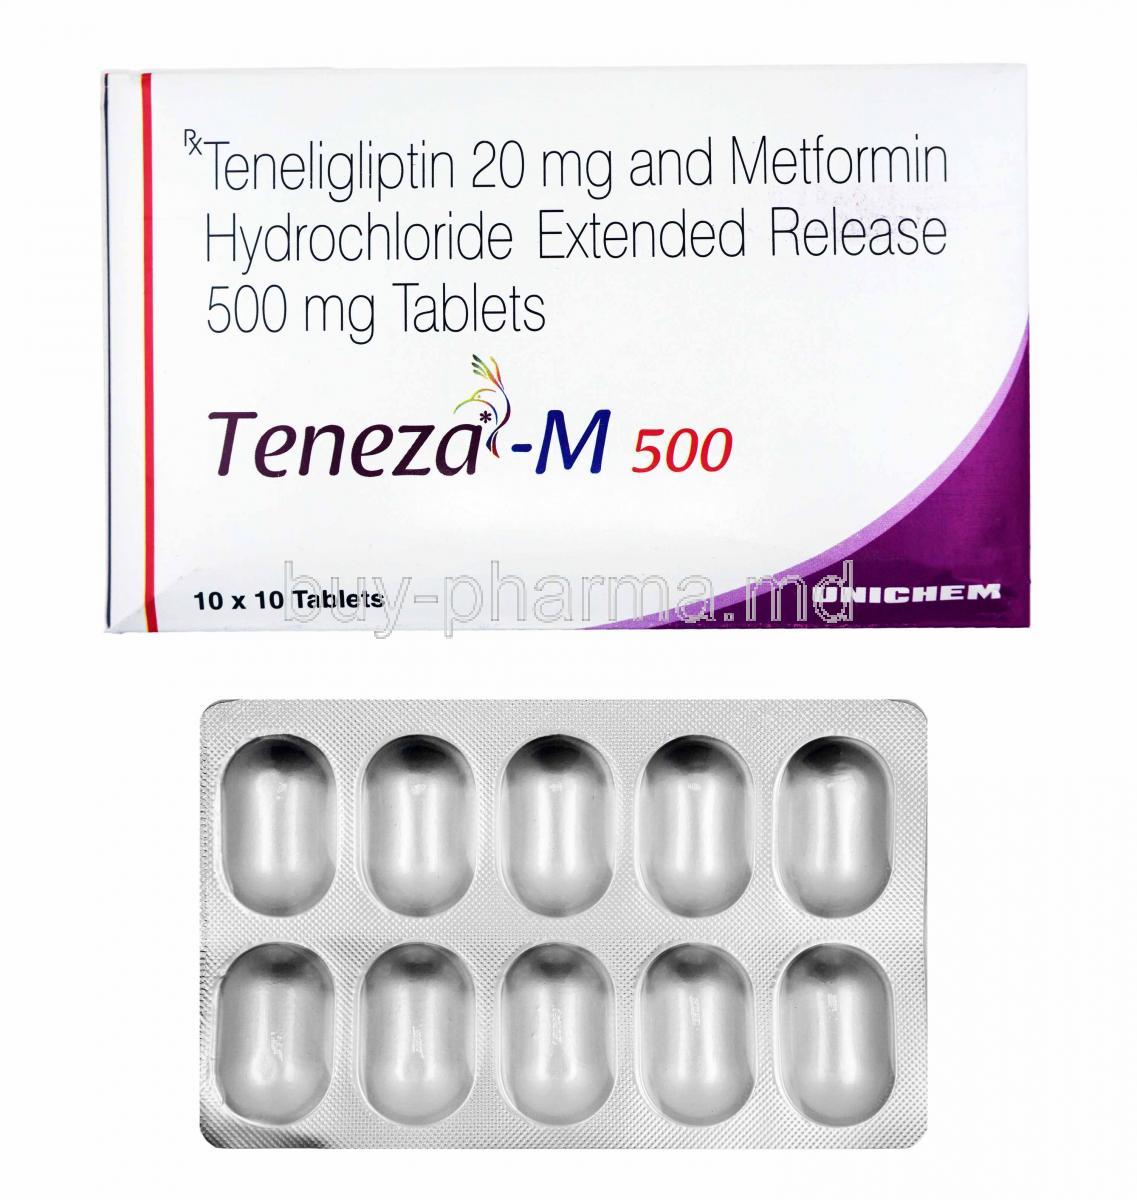 Teneza-M, Metformin 500mg and Teneligliptin box and tablets